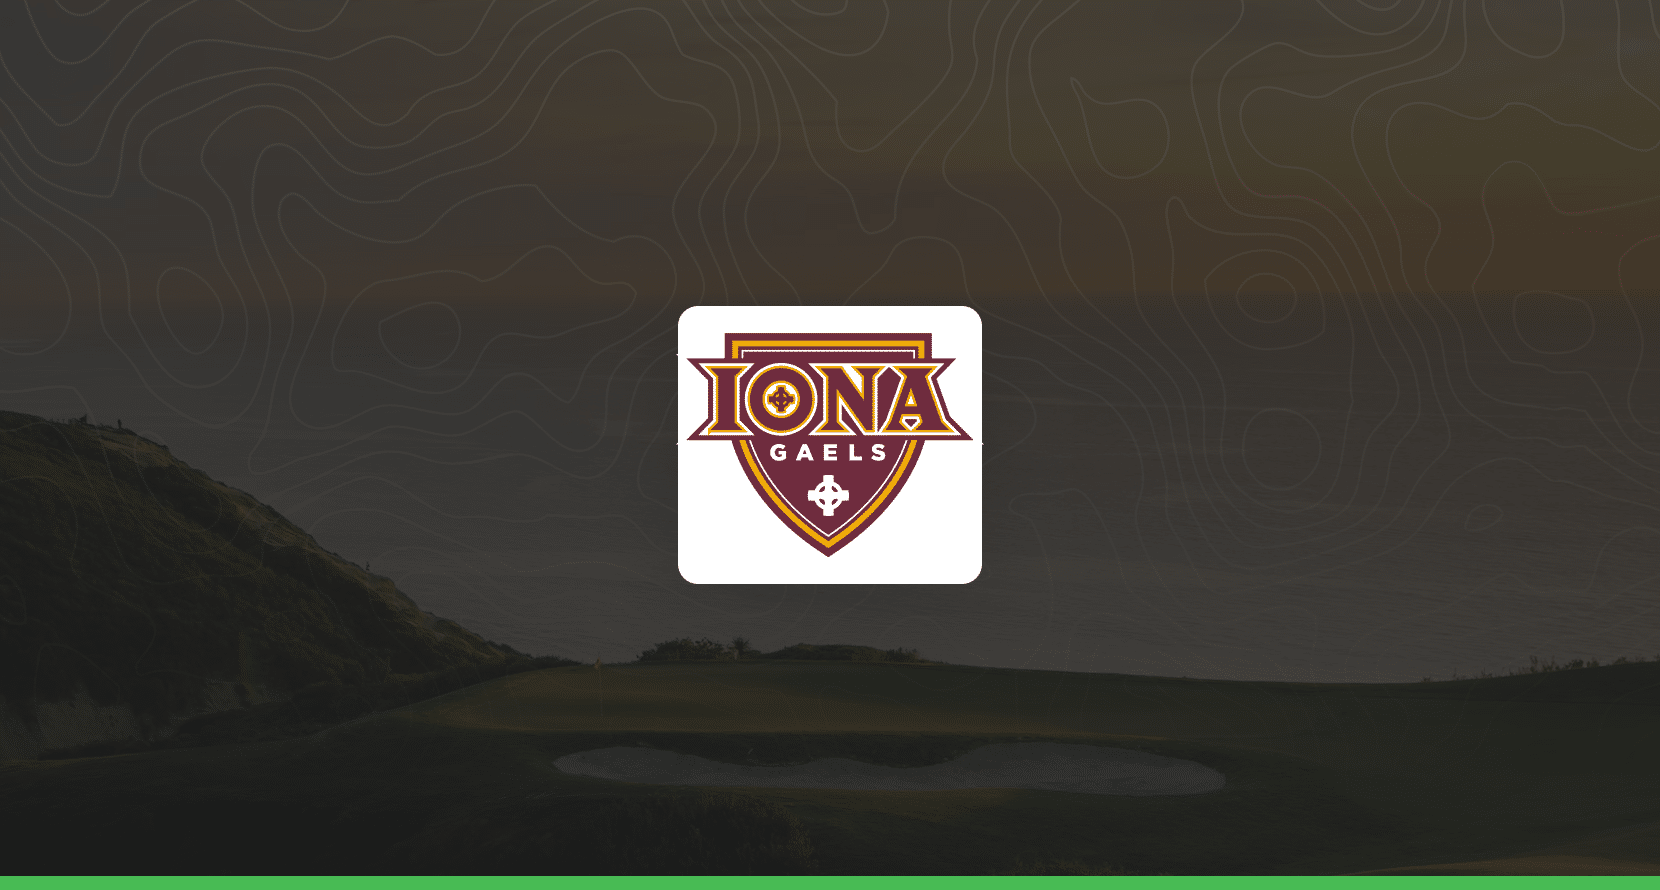 SwingU Coach Announces Partnership With Iona University’s Men’s Golf Team